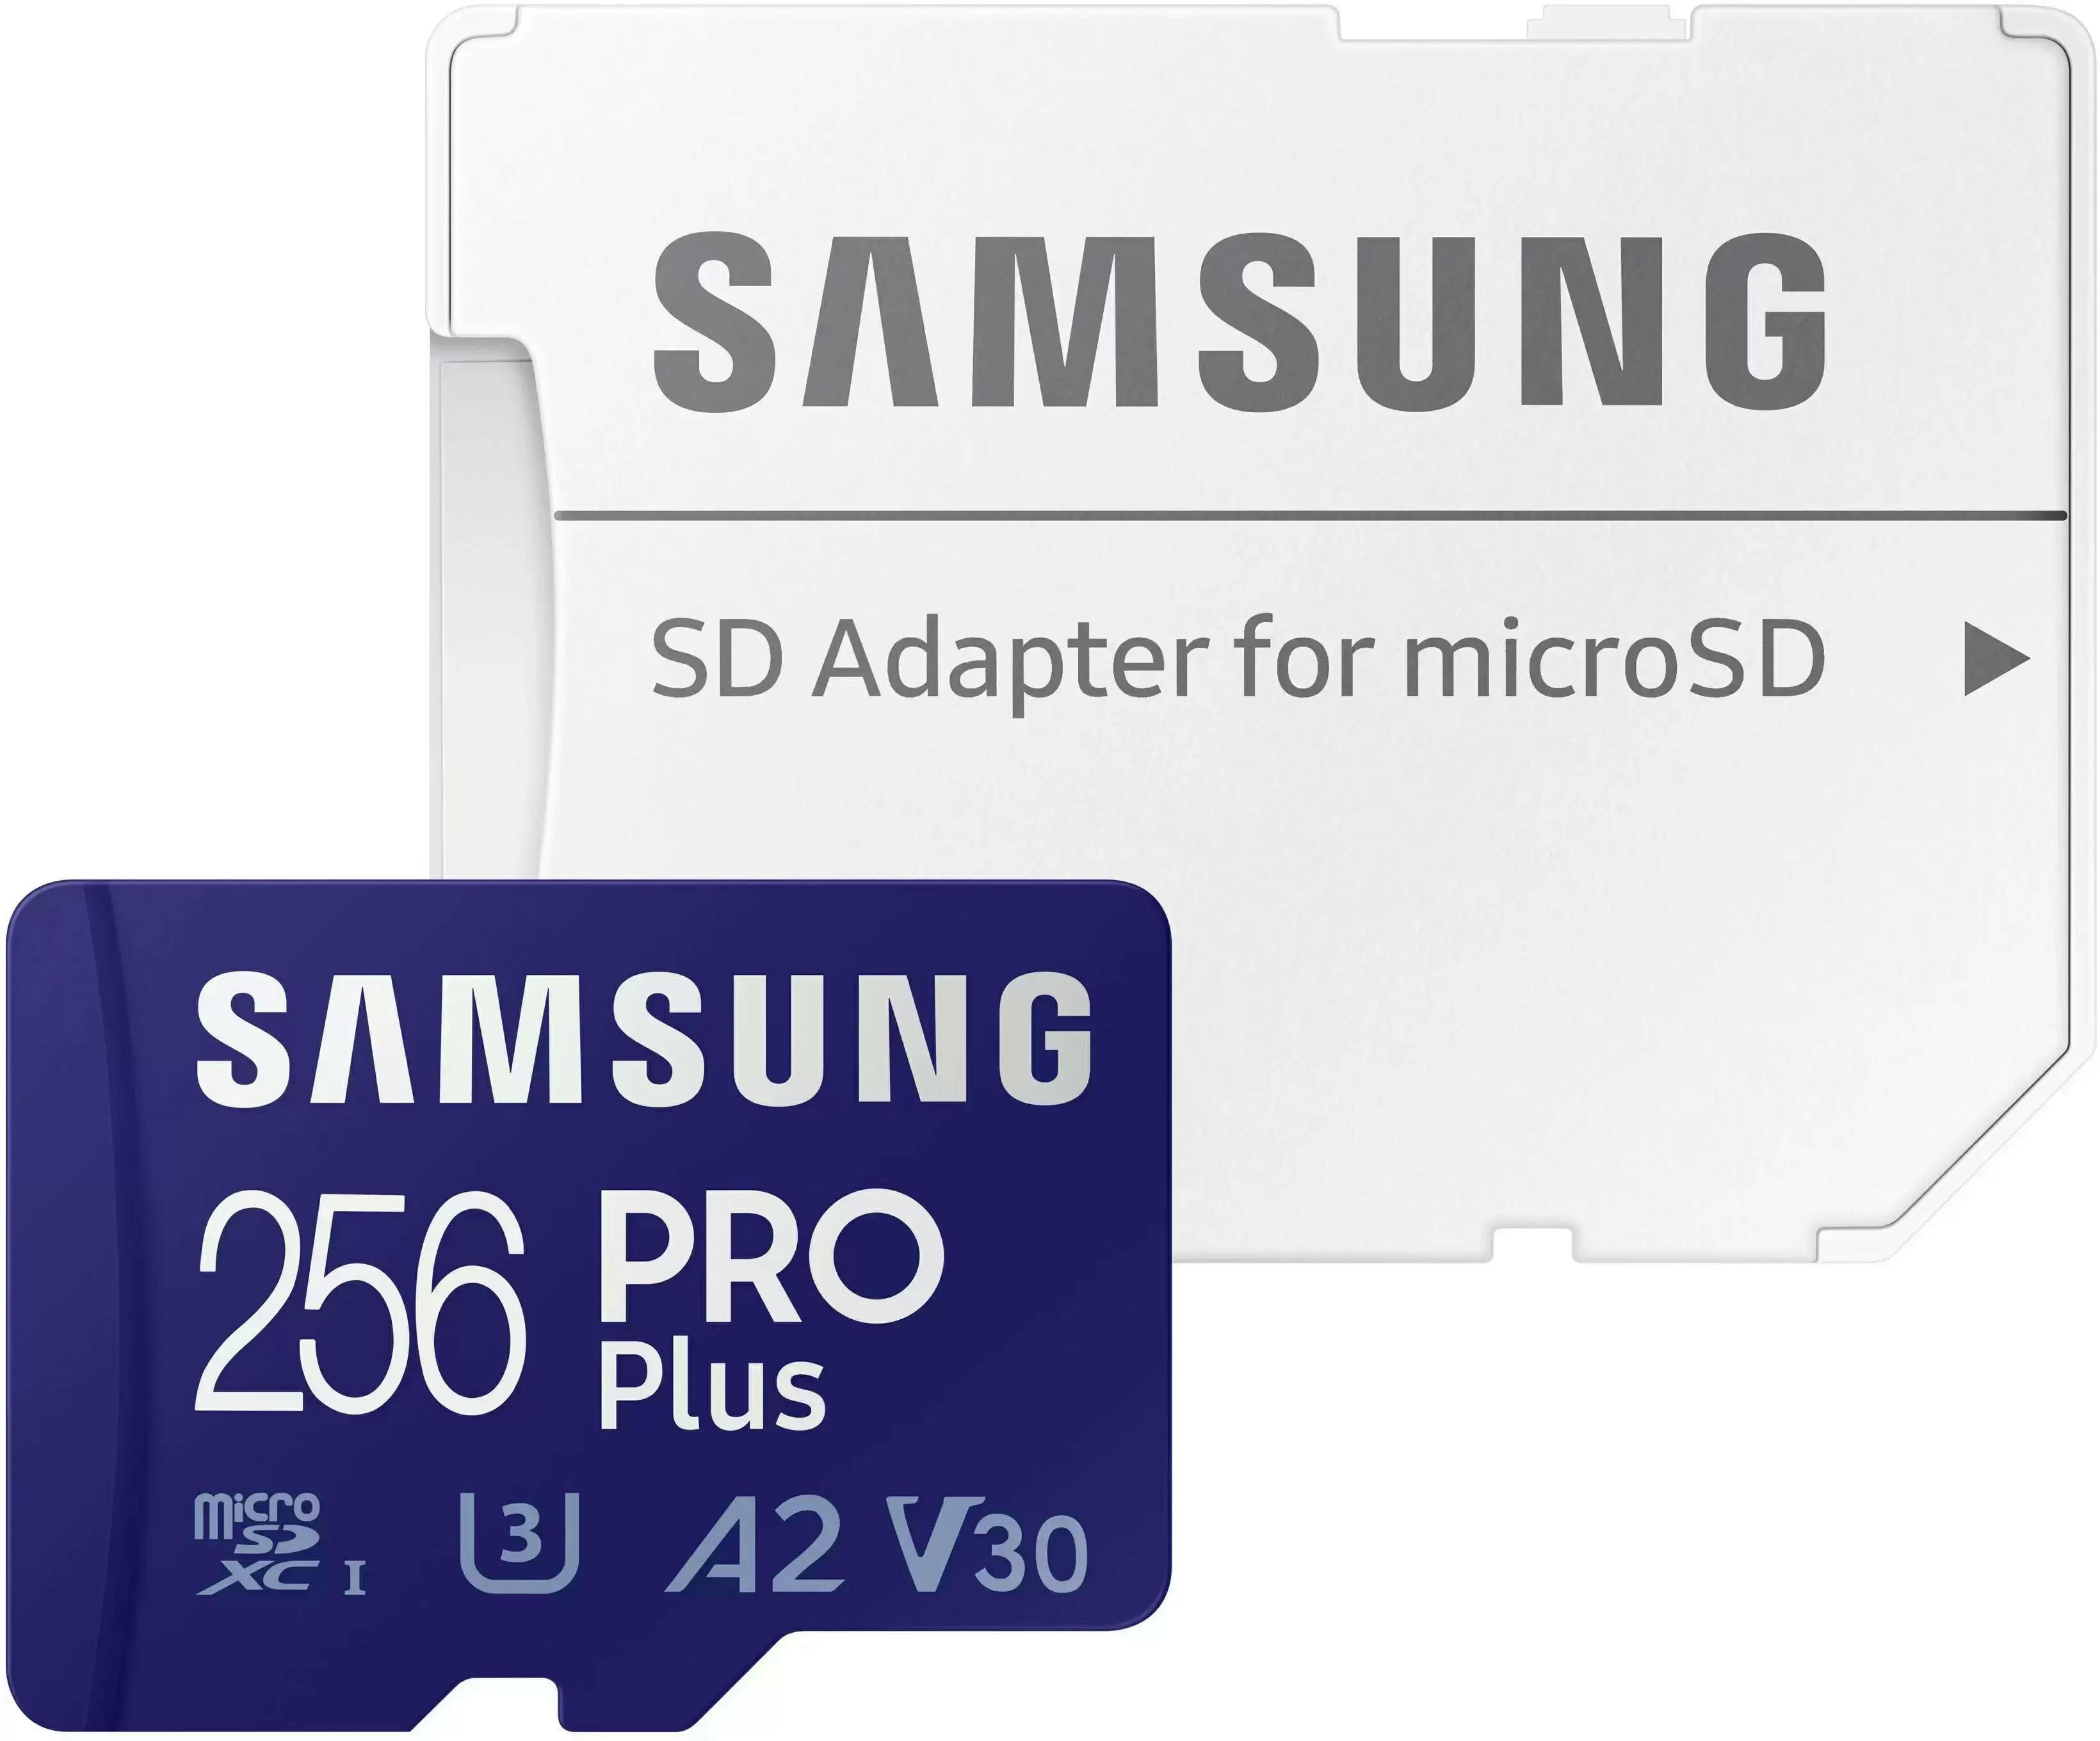 256GB Samsung PRO Plus A2 V30 microSDXC Memory Card for $21.99 Shipped